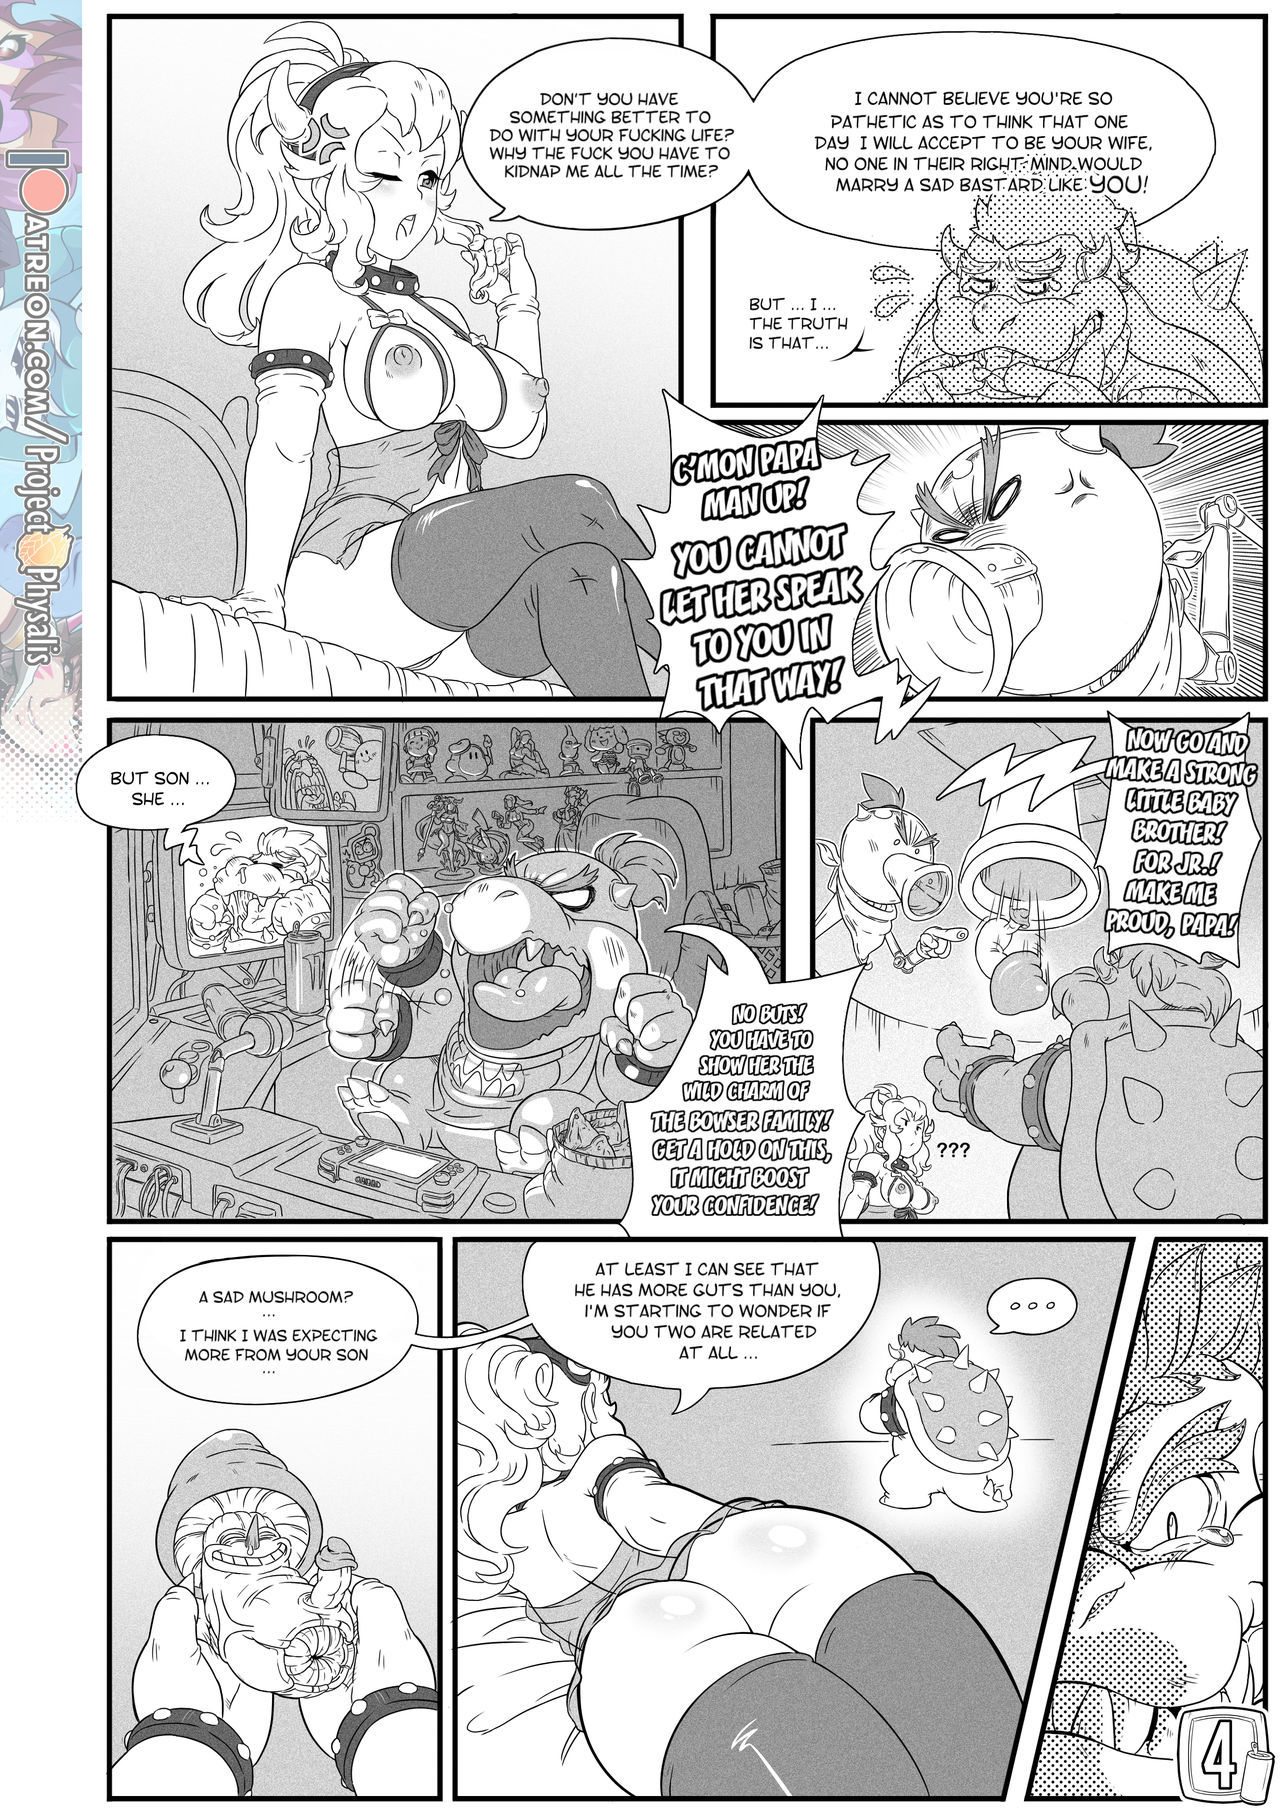 Princess Conquest (Super Mario Bros.) by Project physalis page 5